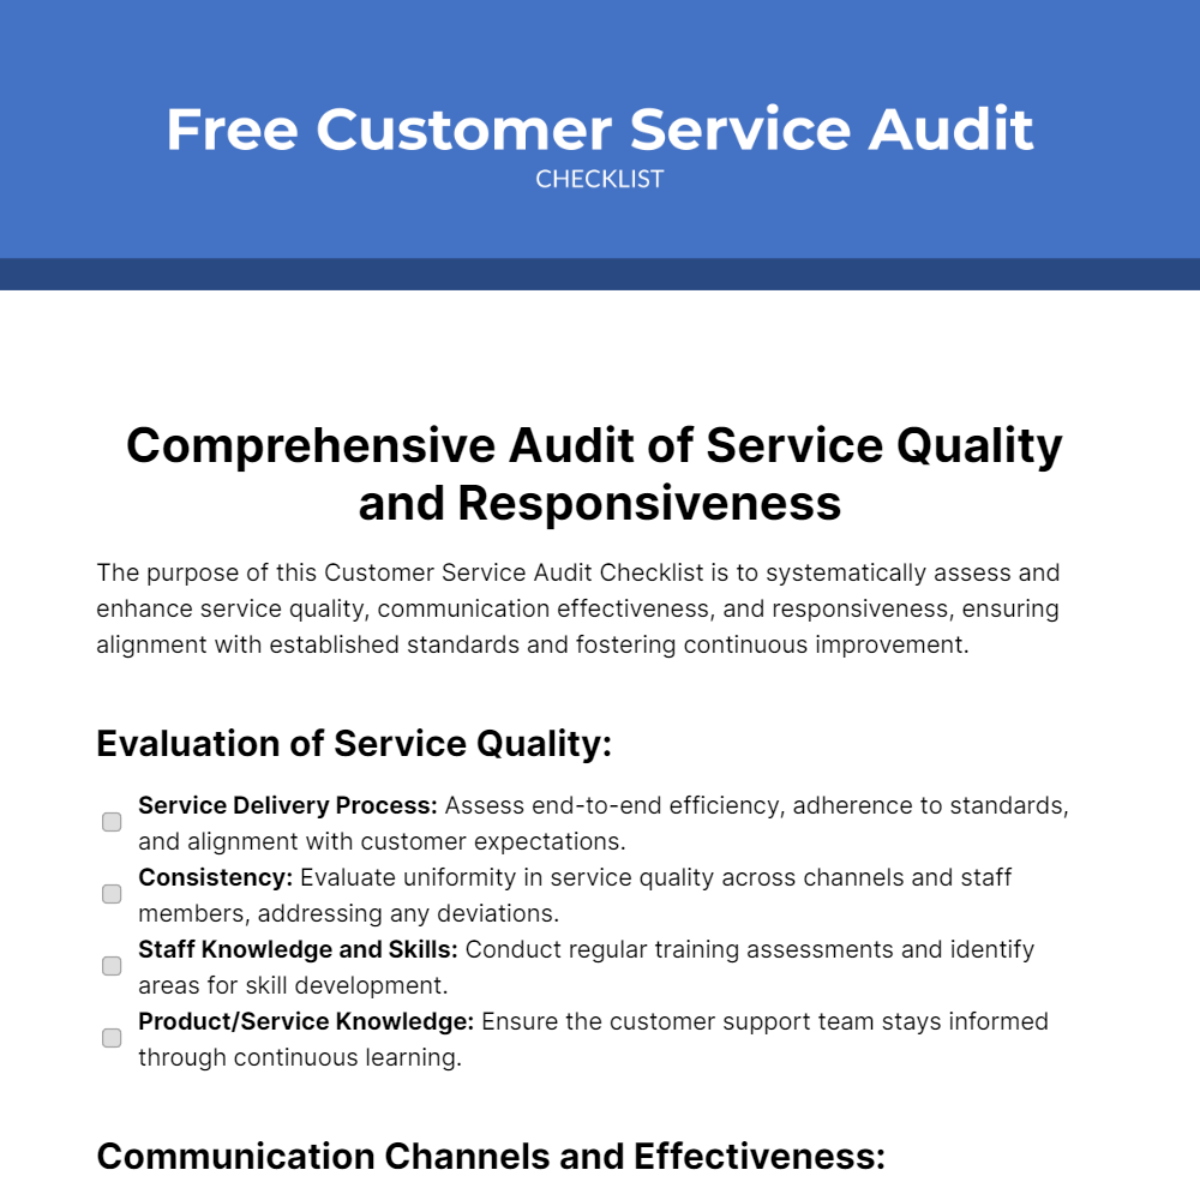 Free Customer Service Audit Checklist Template